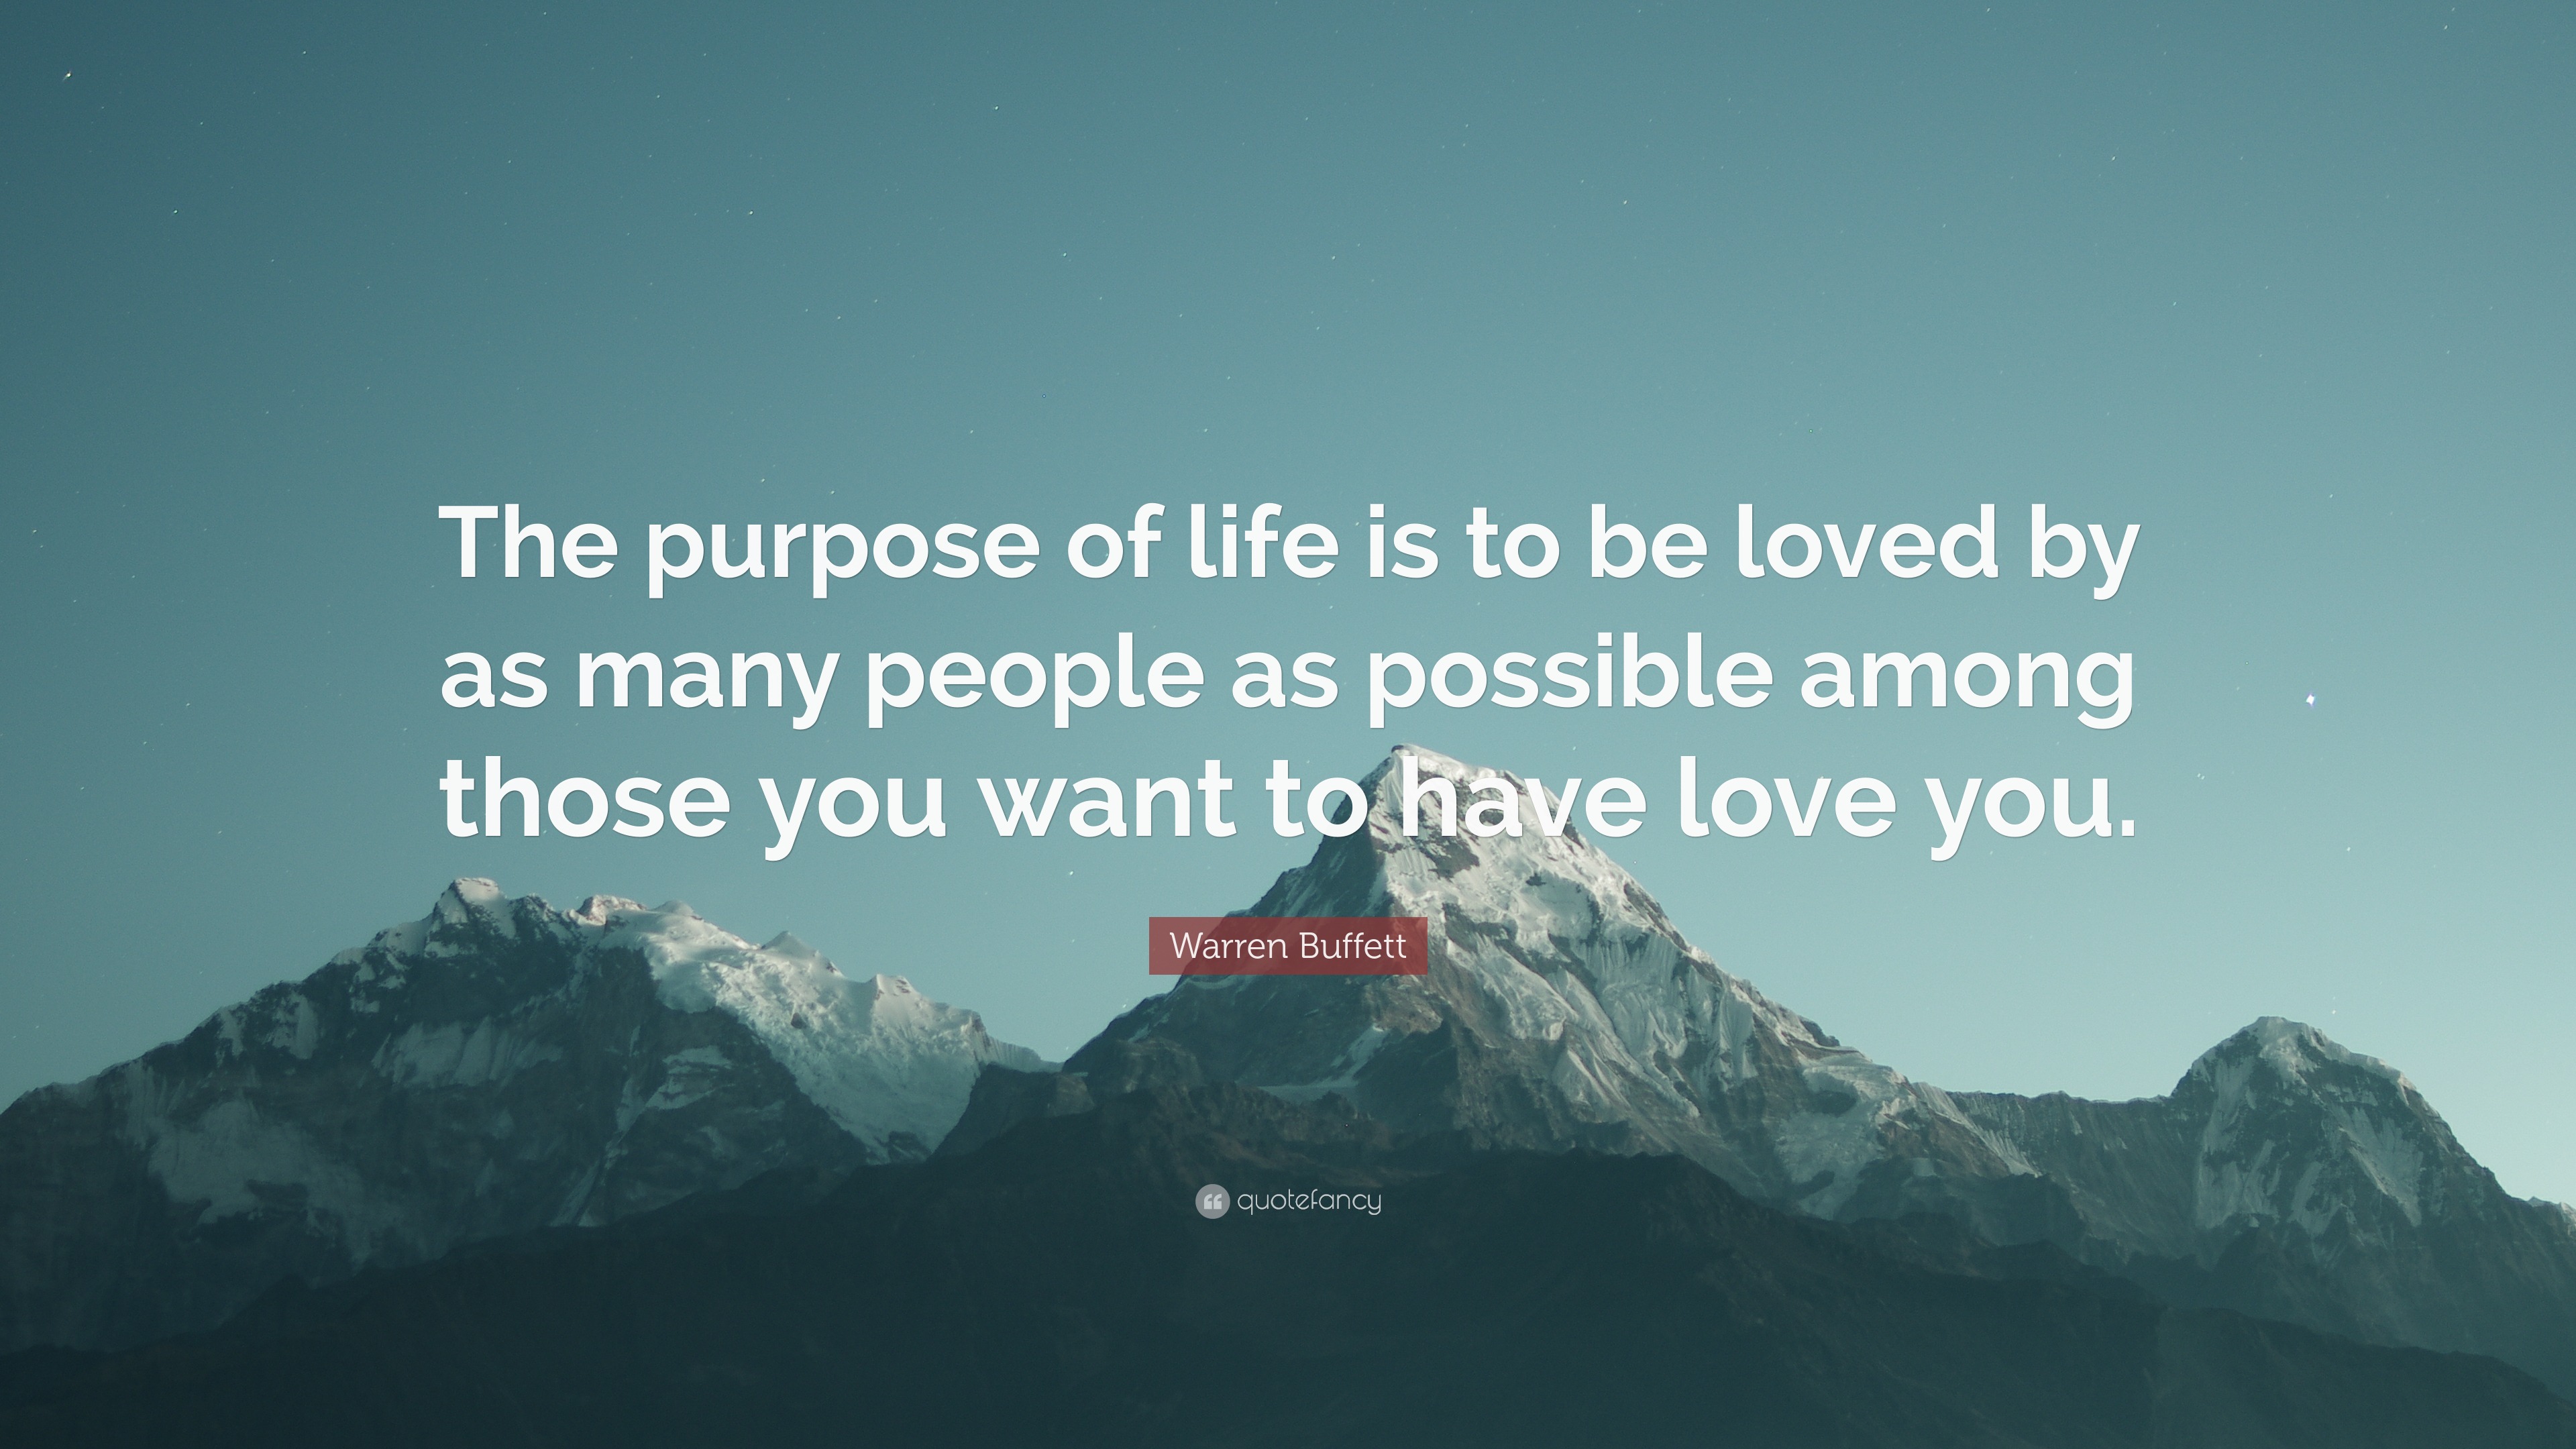 warren buffett quotes on love